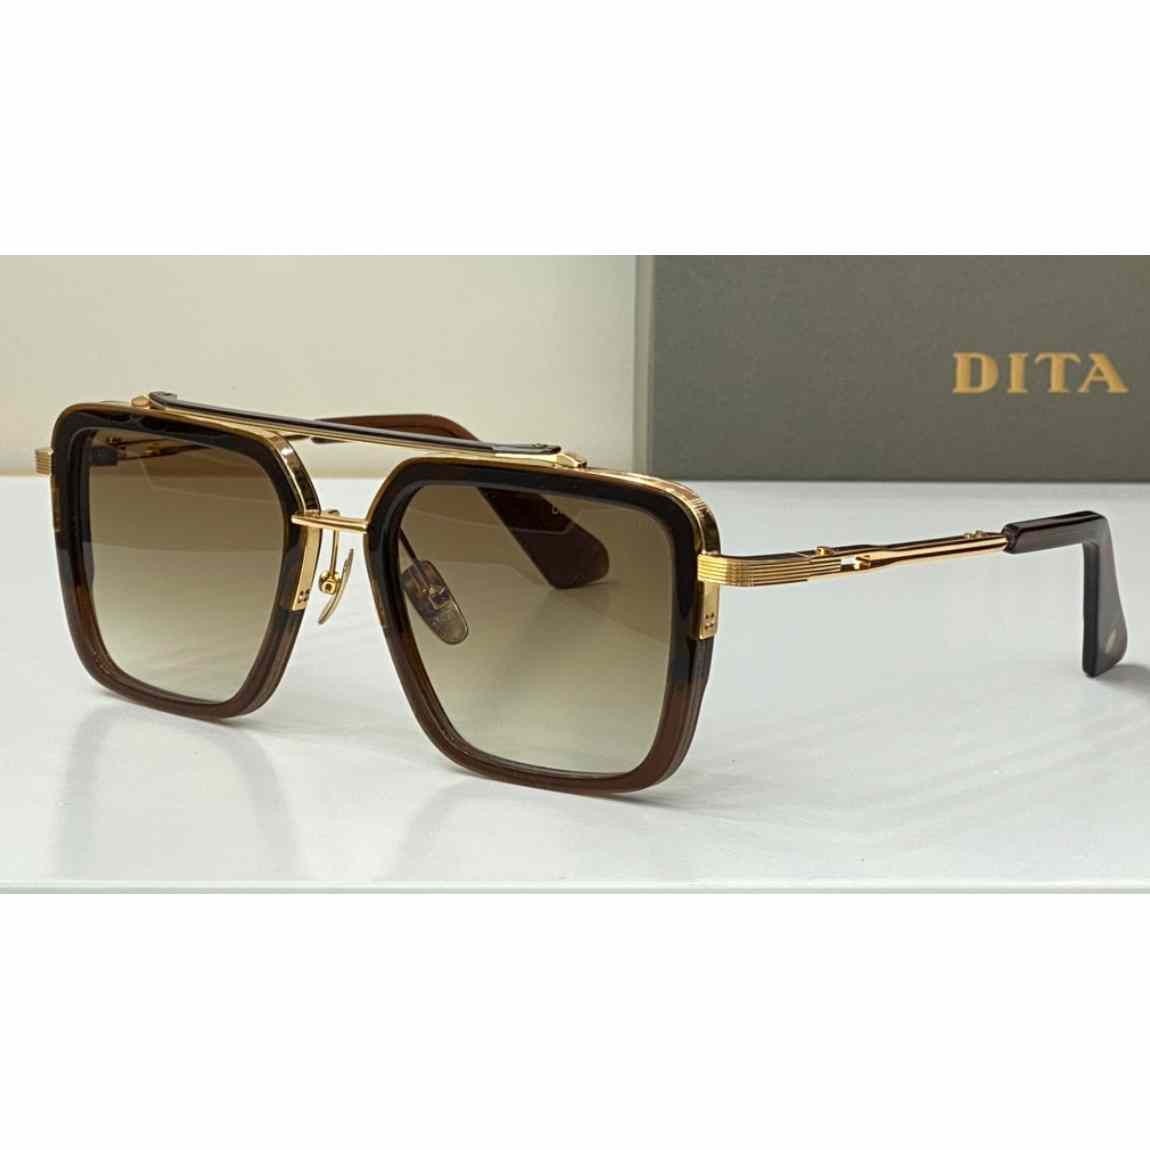 DITA Sunglasses - everydesigner